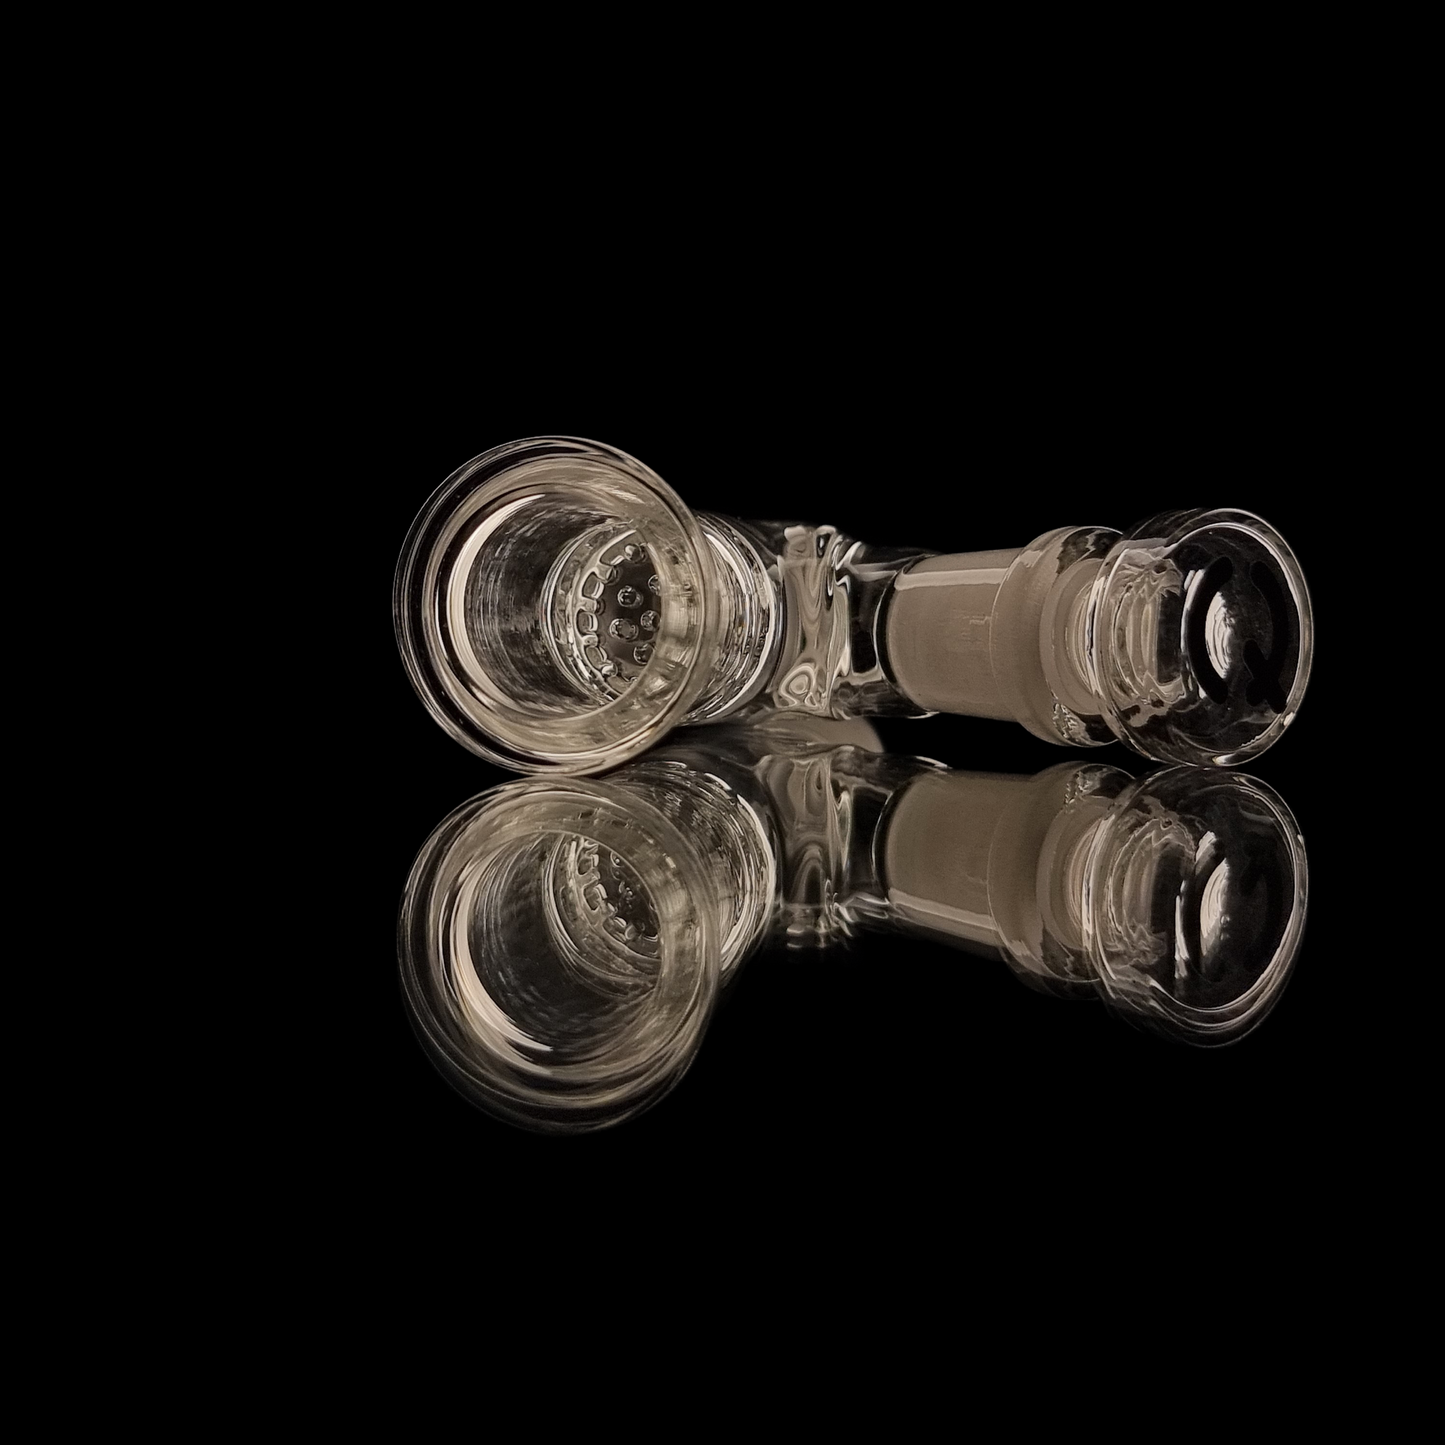 Glass Pass Through Adapter Bowls by QaromaShop